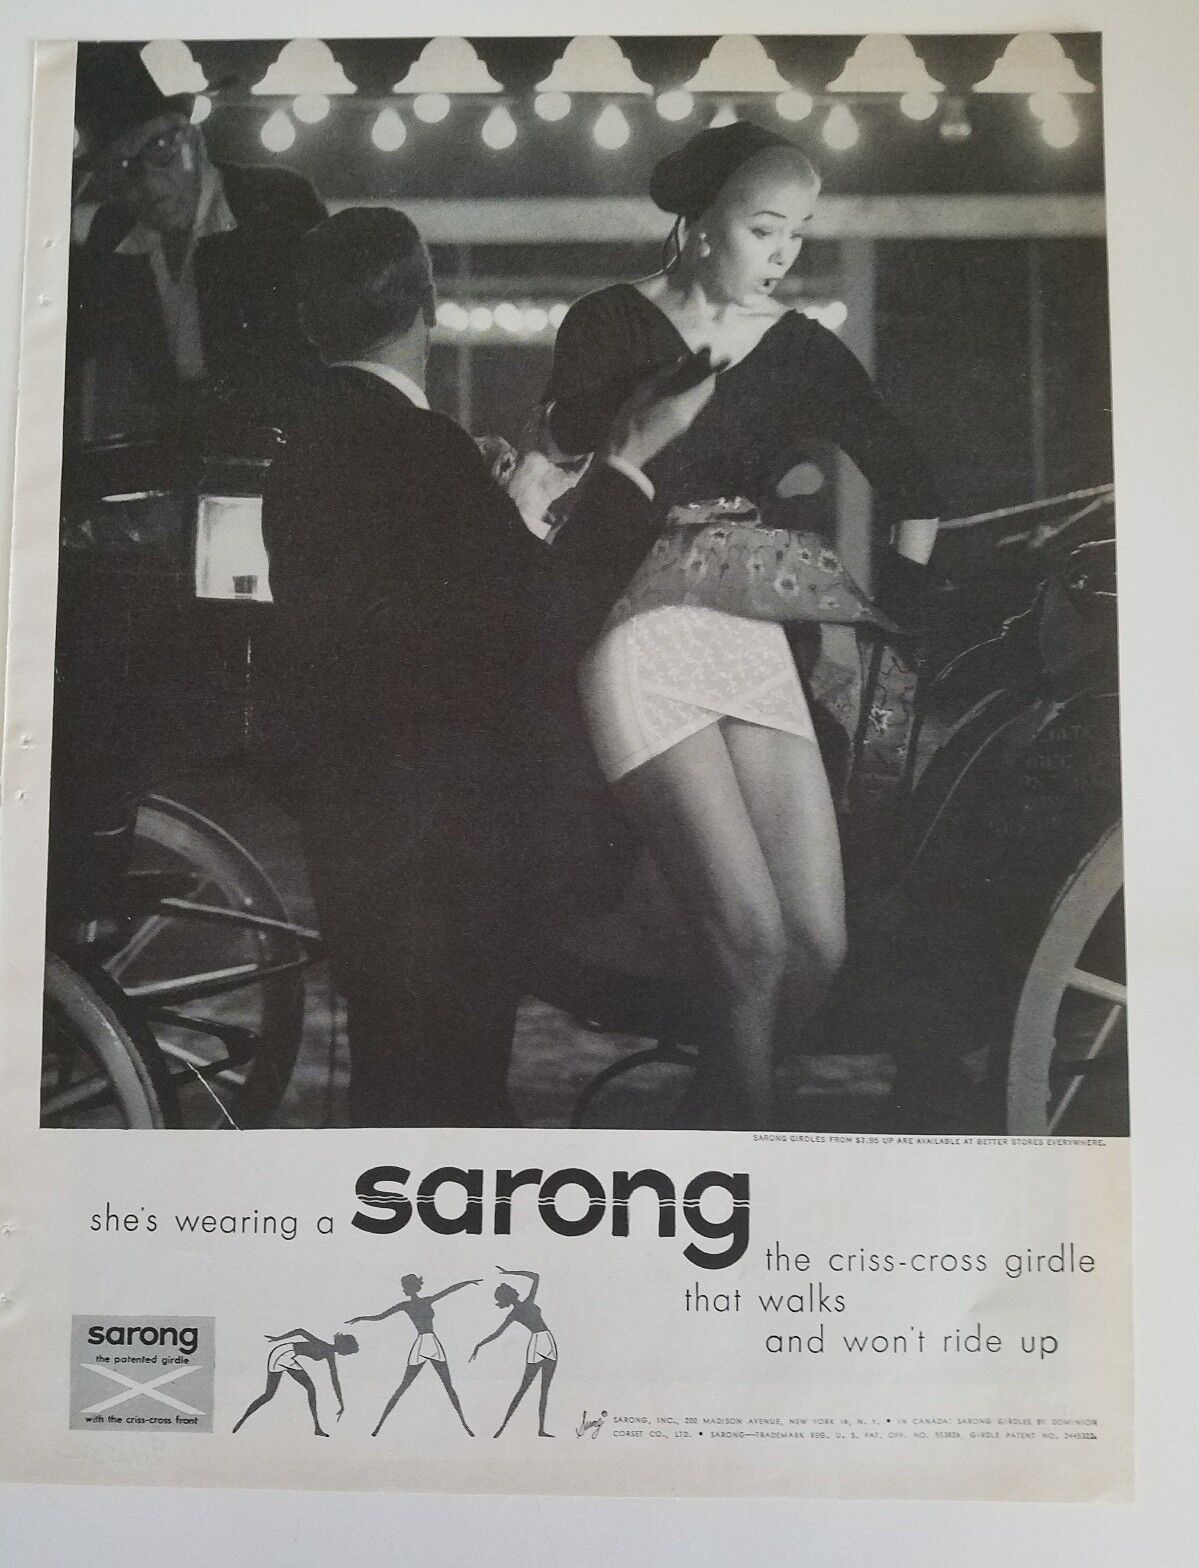 1955 sarong women's white girdle won't ride up under dress ad